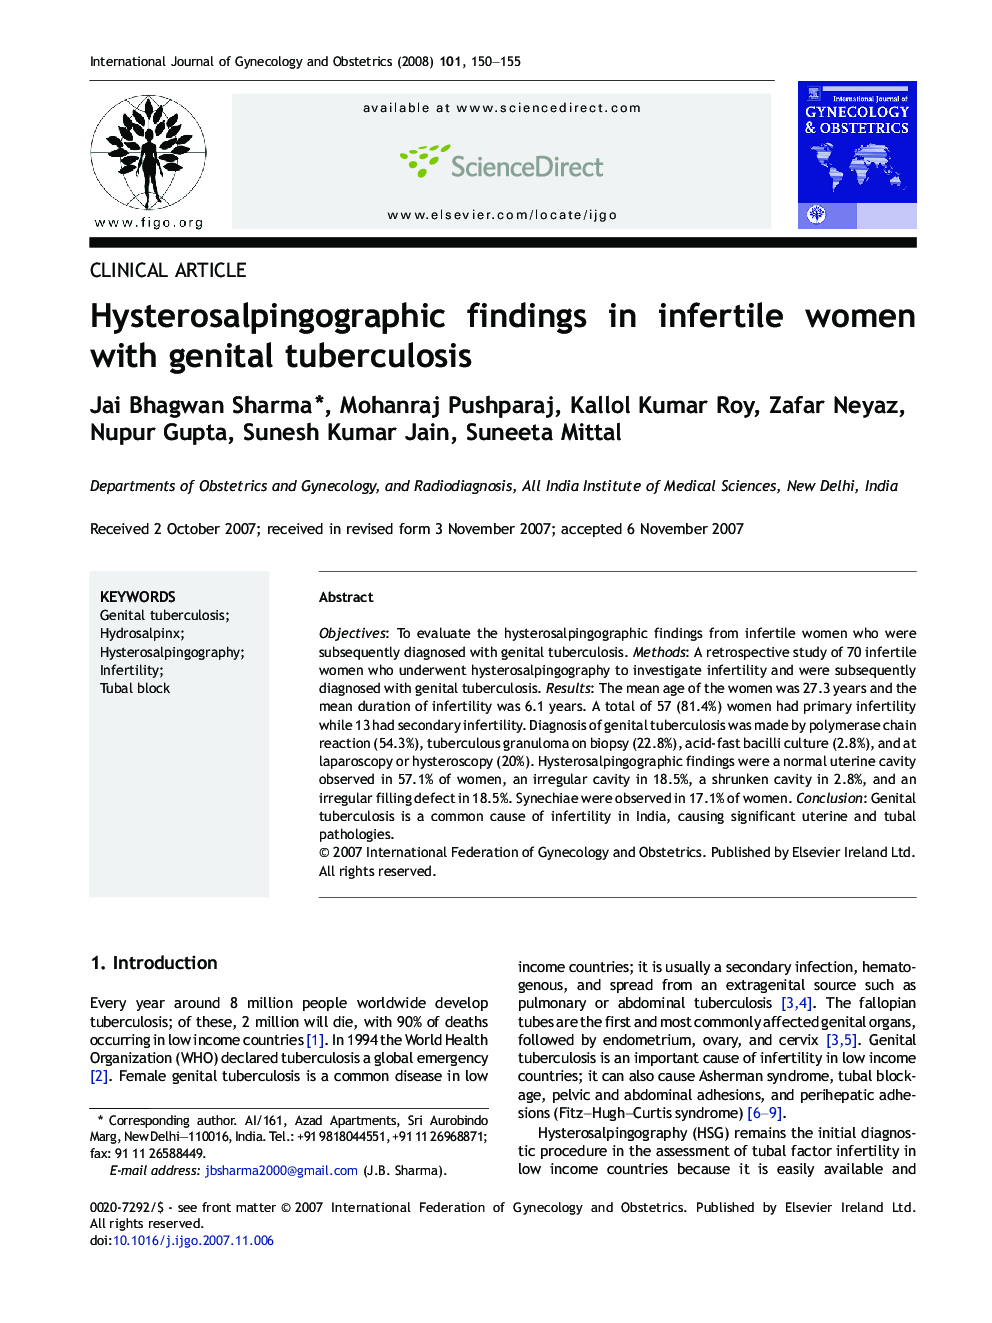 Hysterosalpingographic findings in infertile women with genital tuberculosis